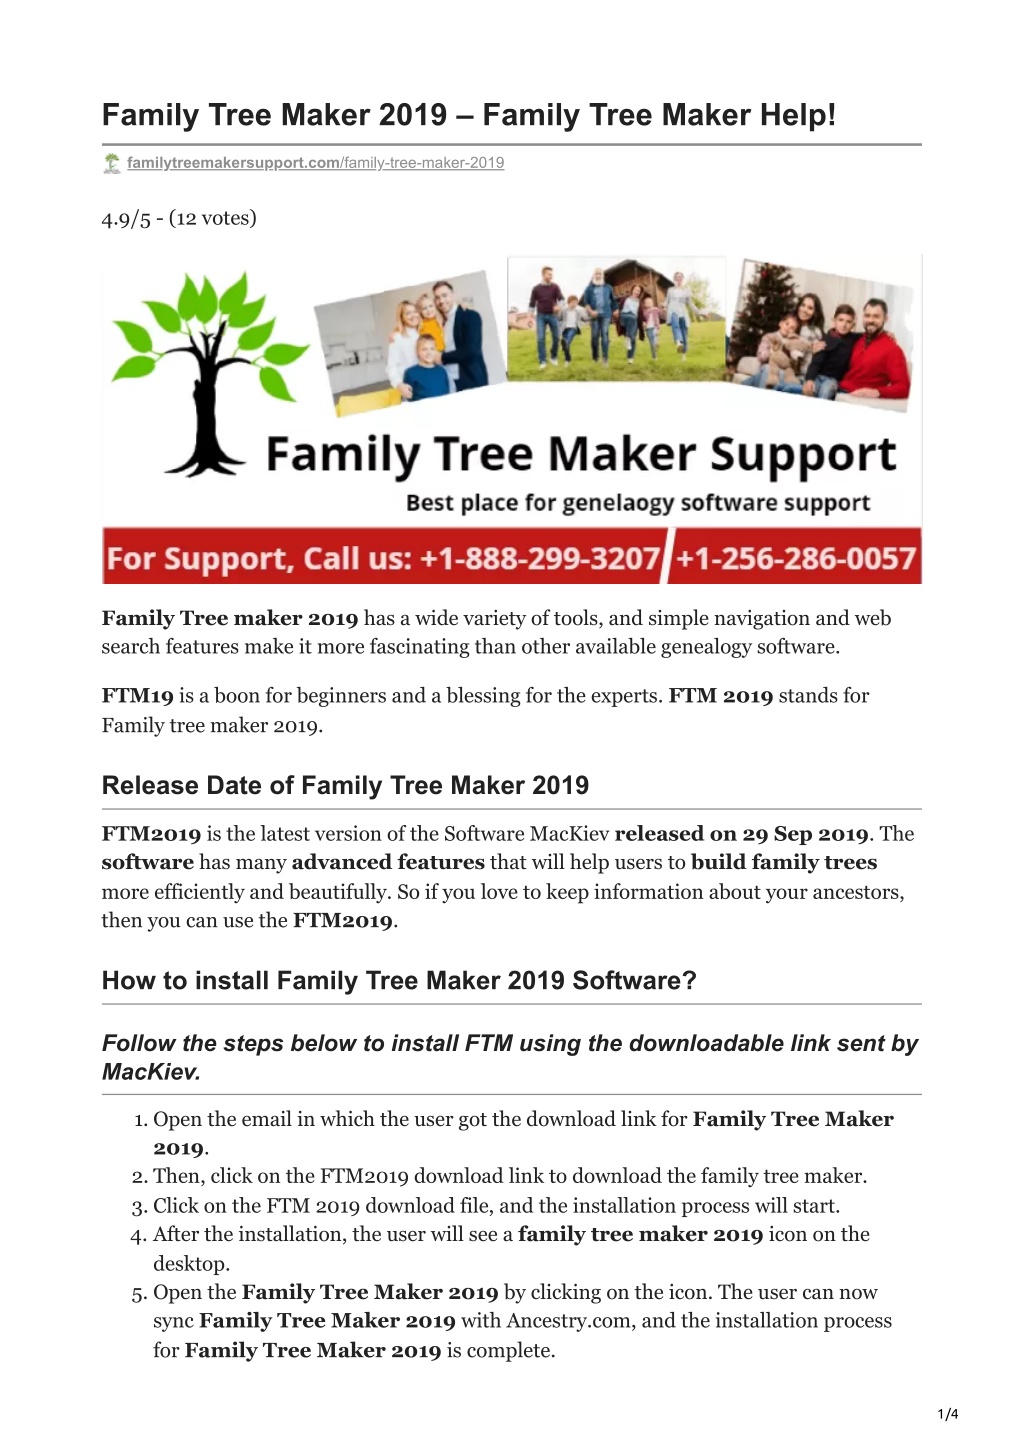 PPT - Family Tree Maker 2019 Family Tree Maker Help PowerPoint ...